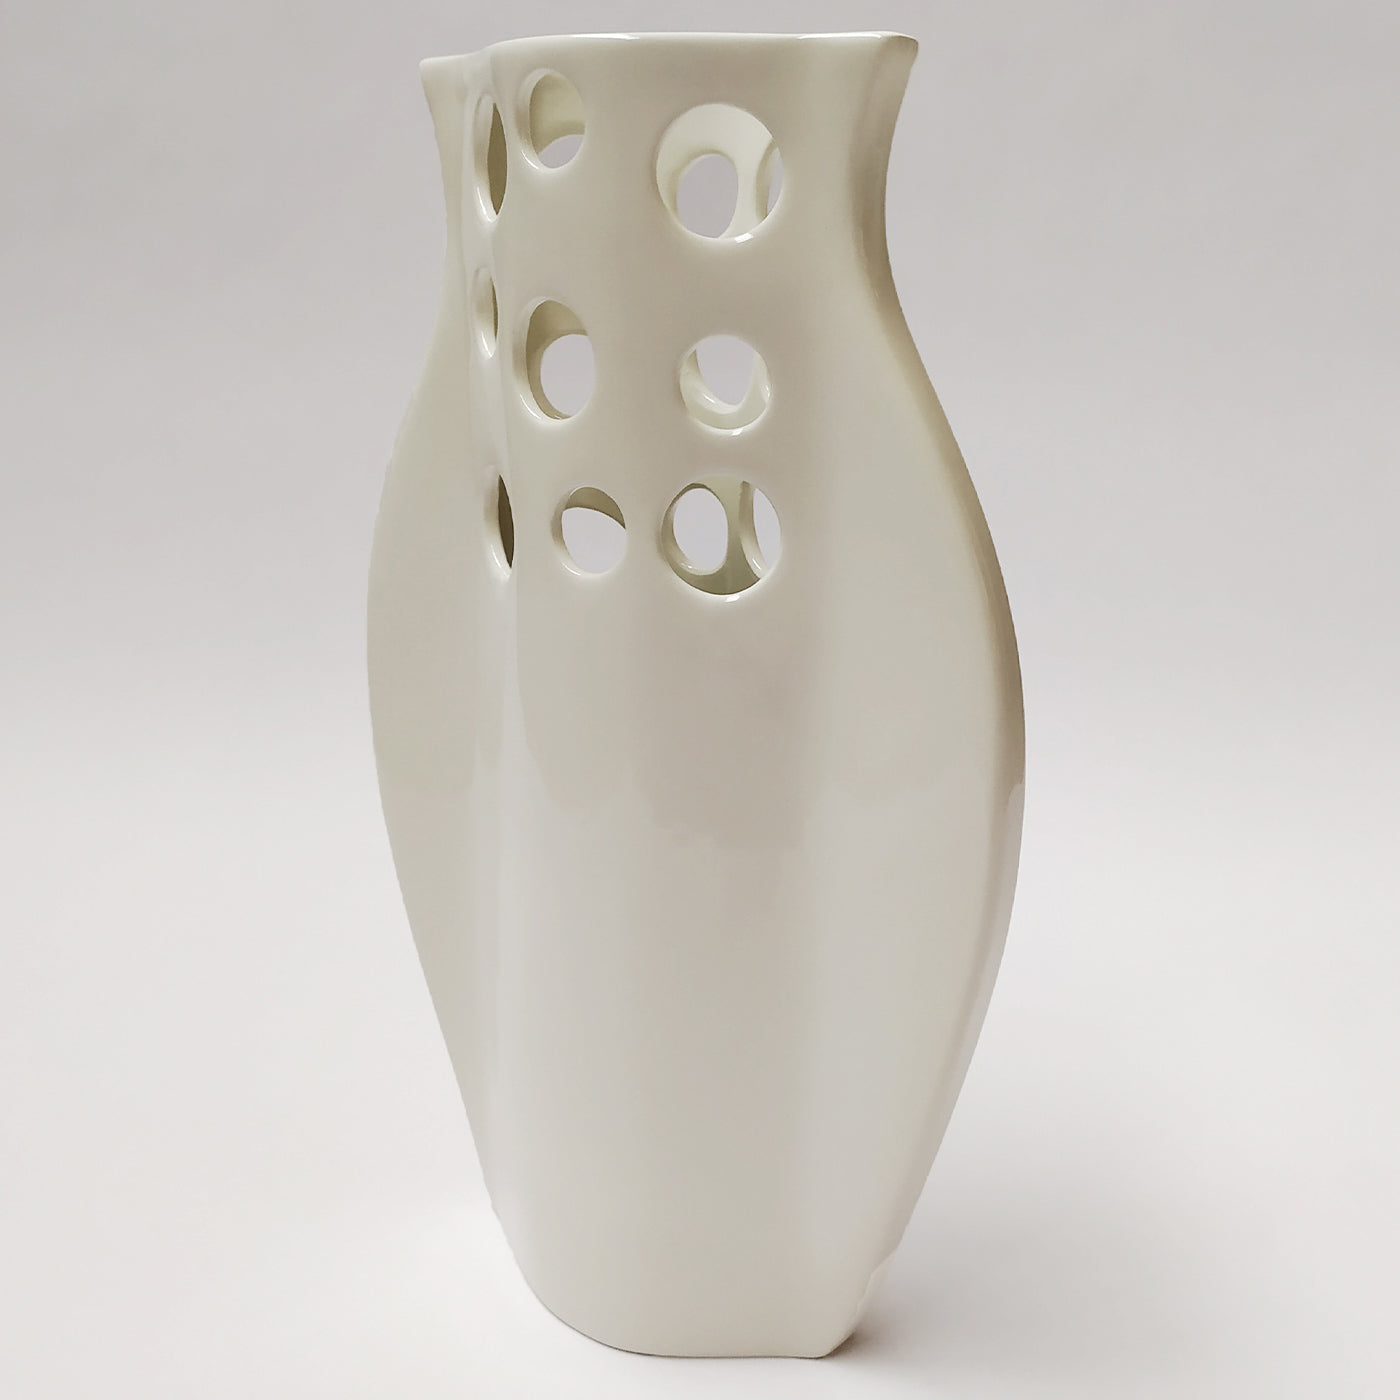 Schiacciati Glossy White Vase #2 - Alternative view 1